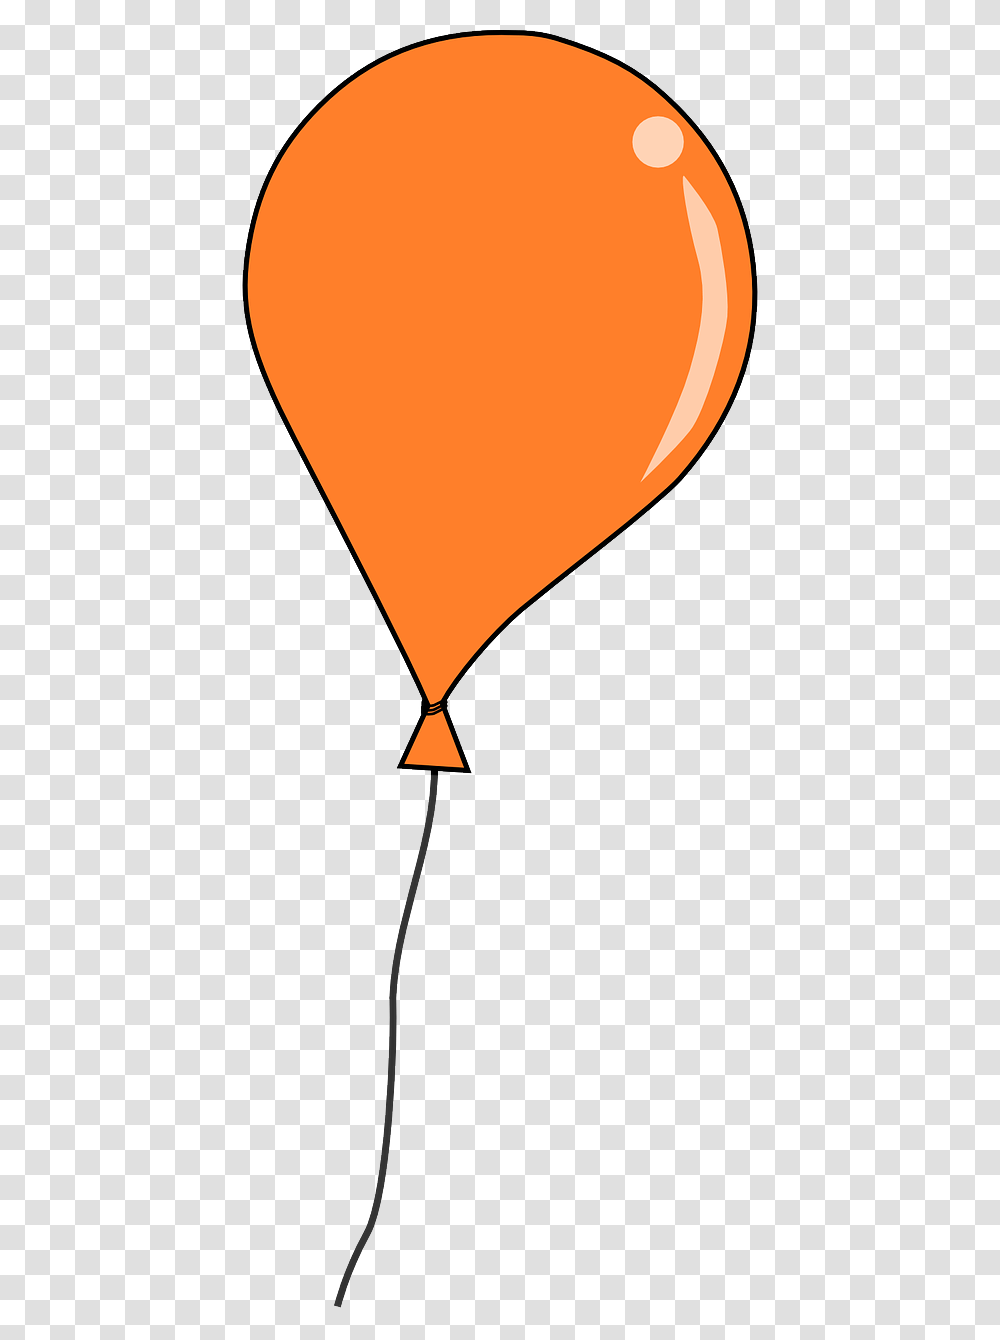 Orange Slice Clip Art, Balloon, Hot Air Balloon, Aircraft, Vehicle Transparent Png